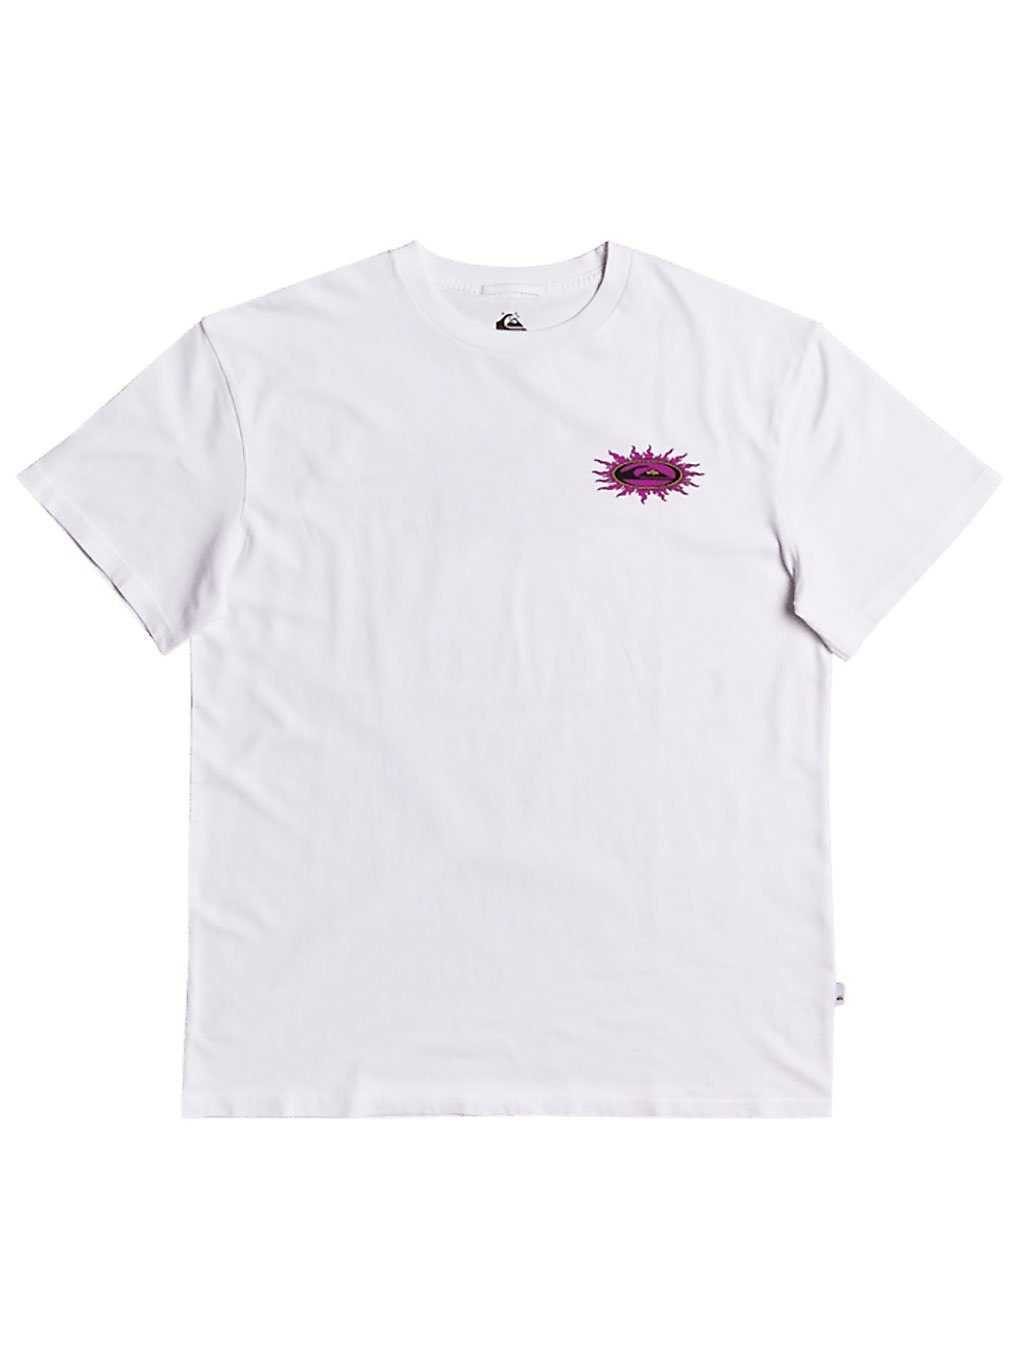 Quiksilver OG Big Bang T-Shirt white